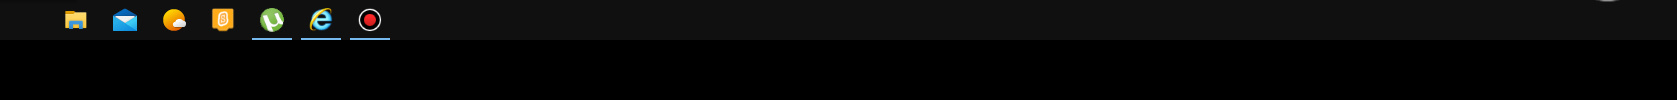 Blank Edge legacy icon stuck on my taskbar even when unplugging and plugging in e82c2509-6b0b-451d-956e-5cae6b262c38?upload=true.jpg